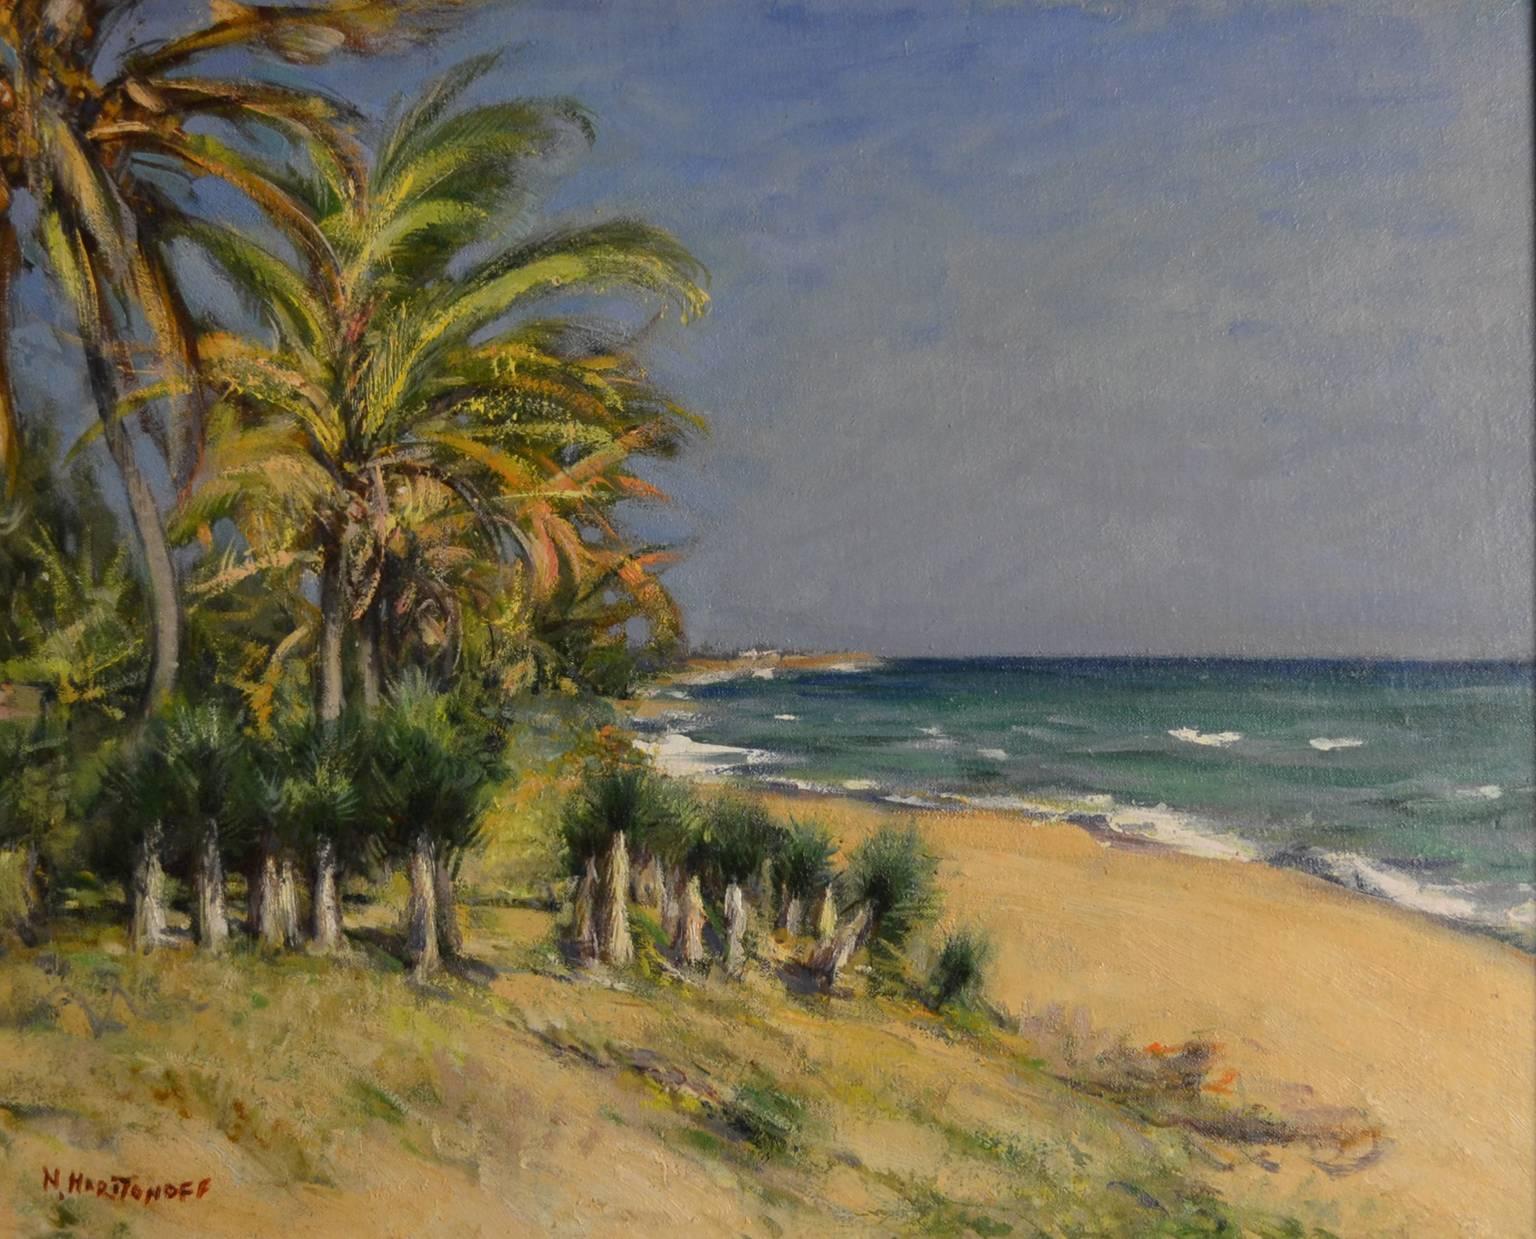 Nicholas Haritonoff Landscape Painting - Tropical Coastal Scene by early 20th century Russian artist